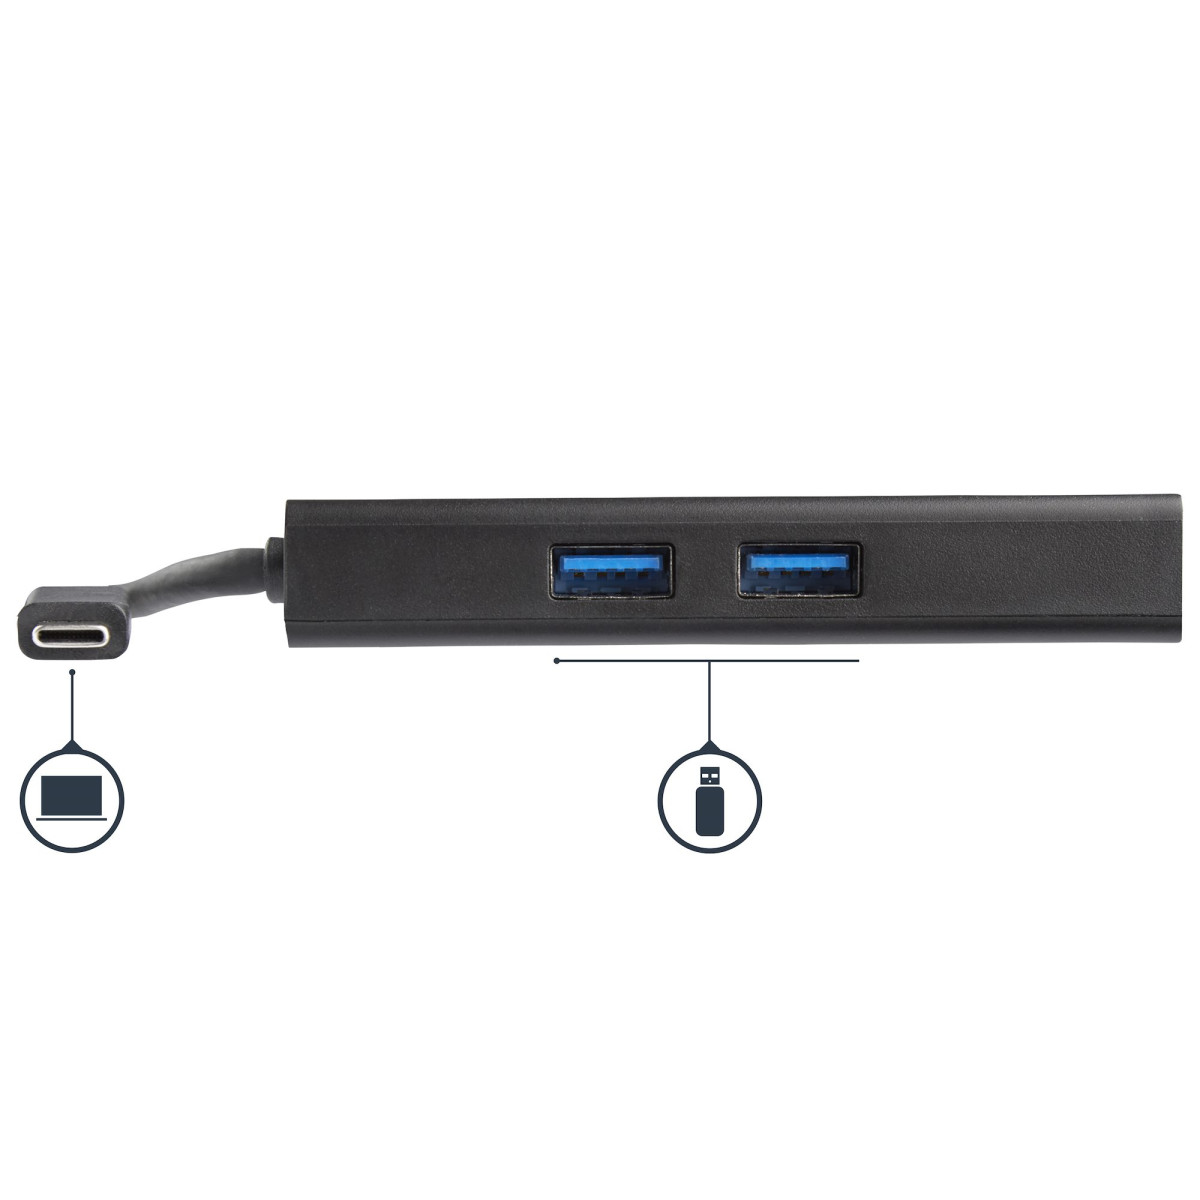 USB C Multifunction Adapter for Laptops